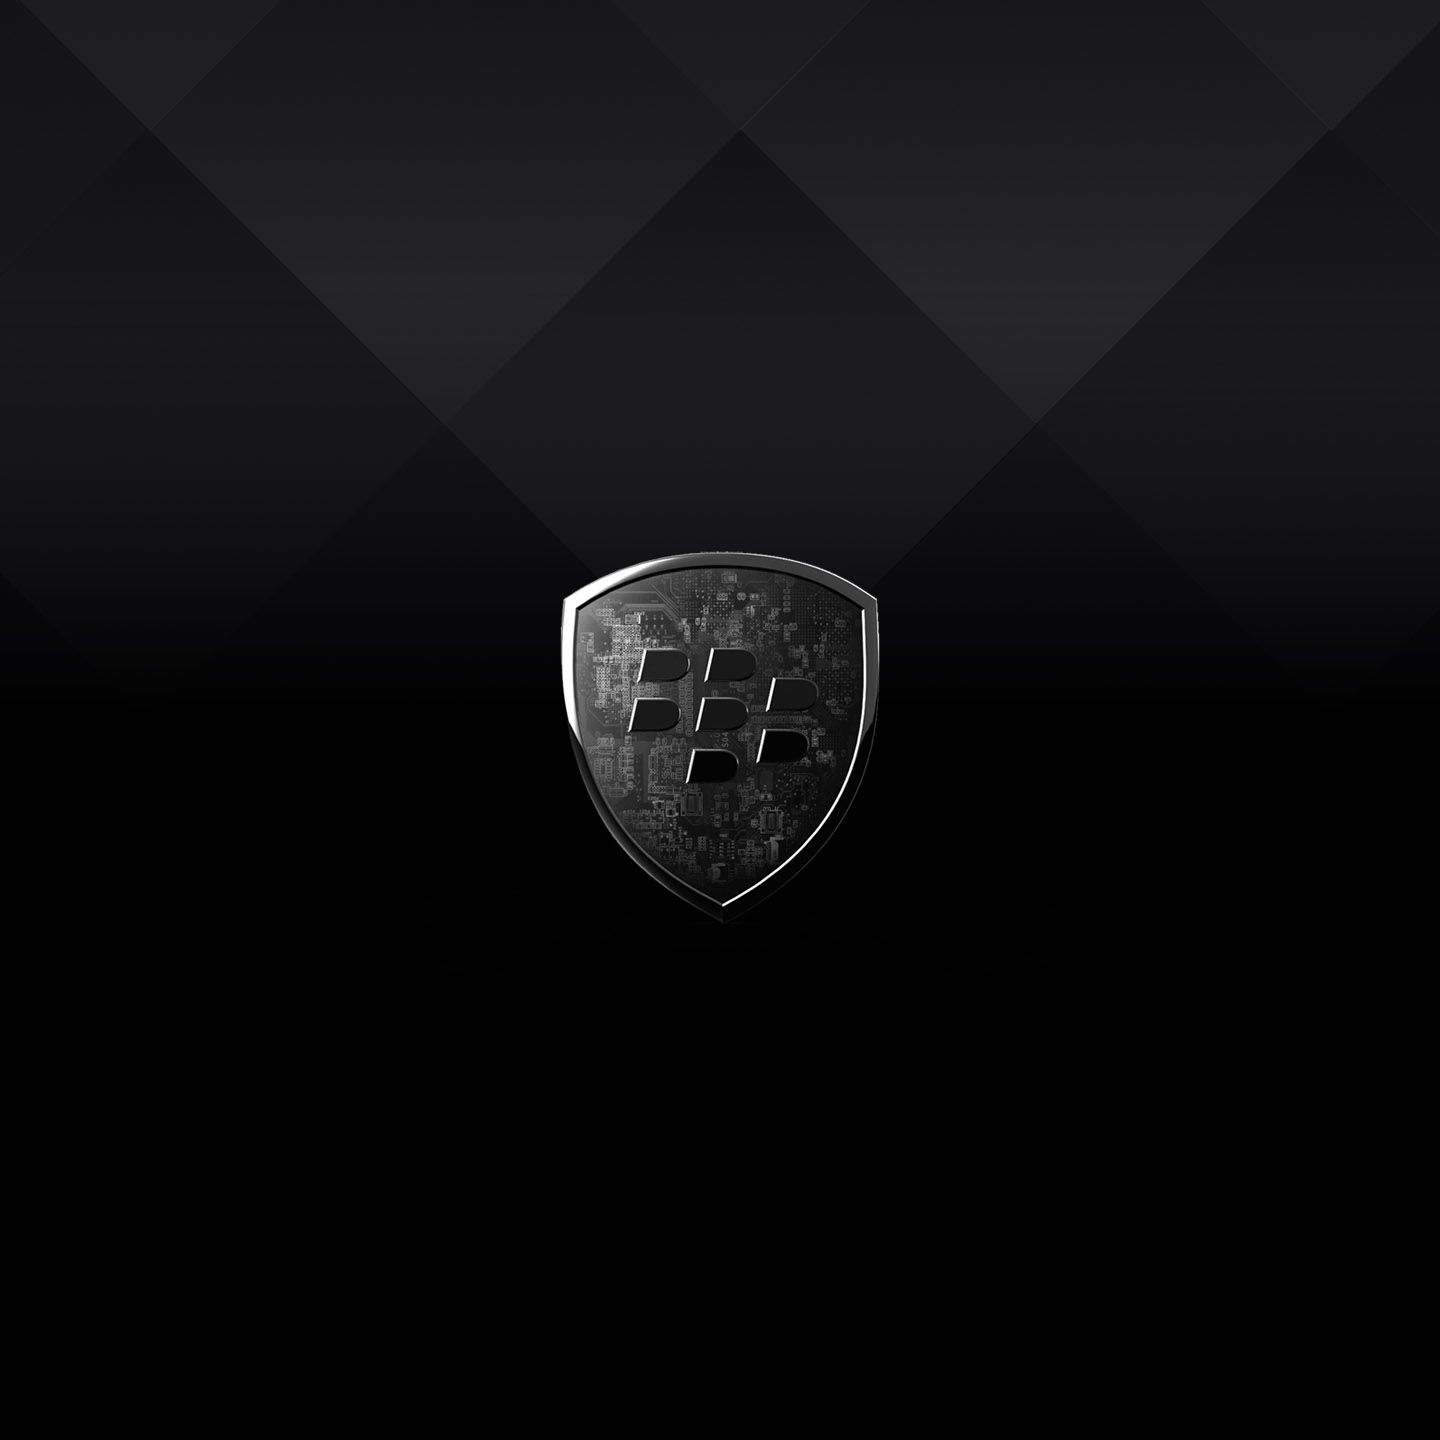 Blackberry Security Shield Passport Wallpaper